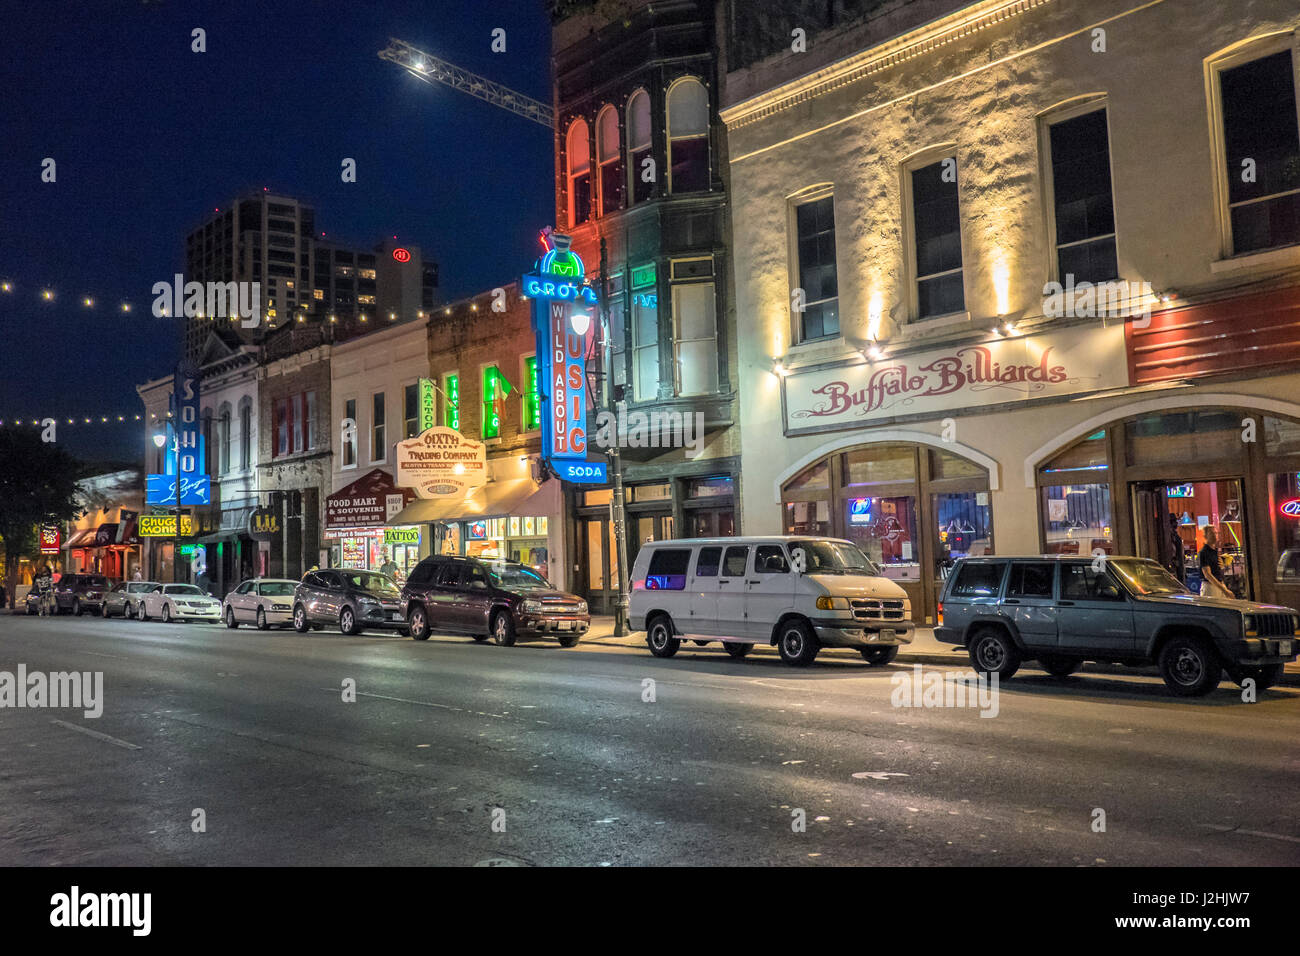 6th street, Buffalo Billiards, Austin, Texas, Usa Stock Photo - Alamy